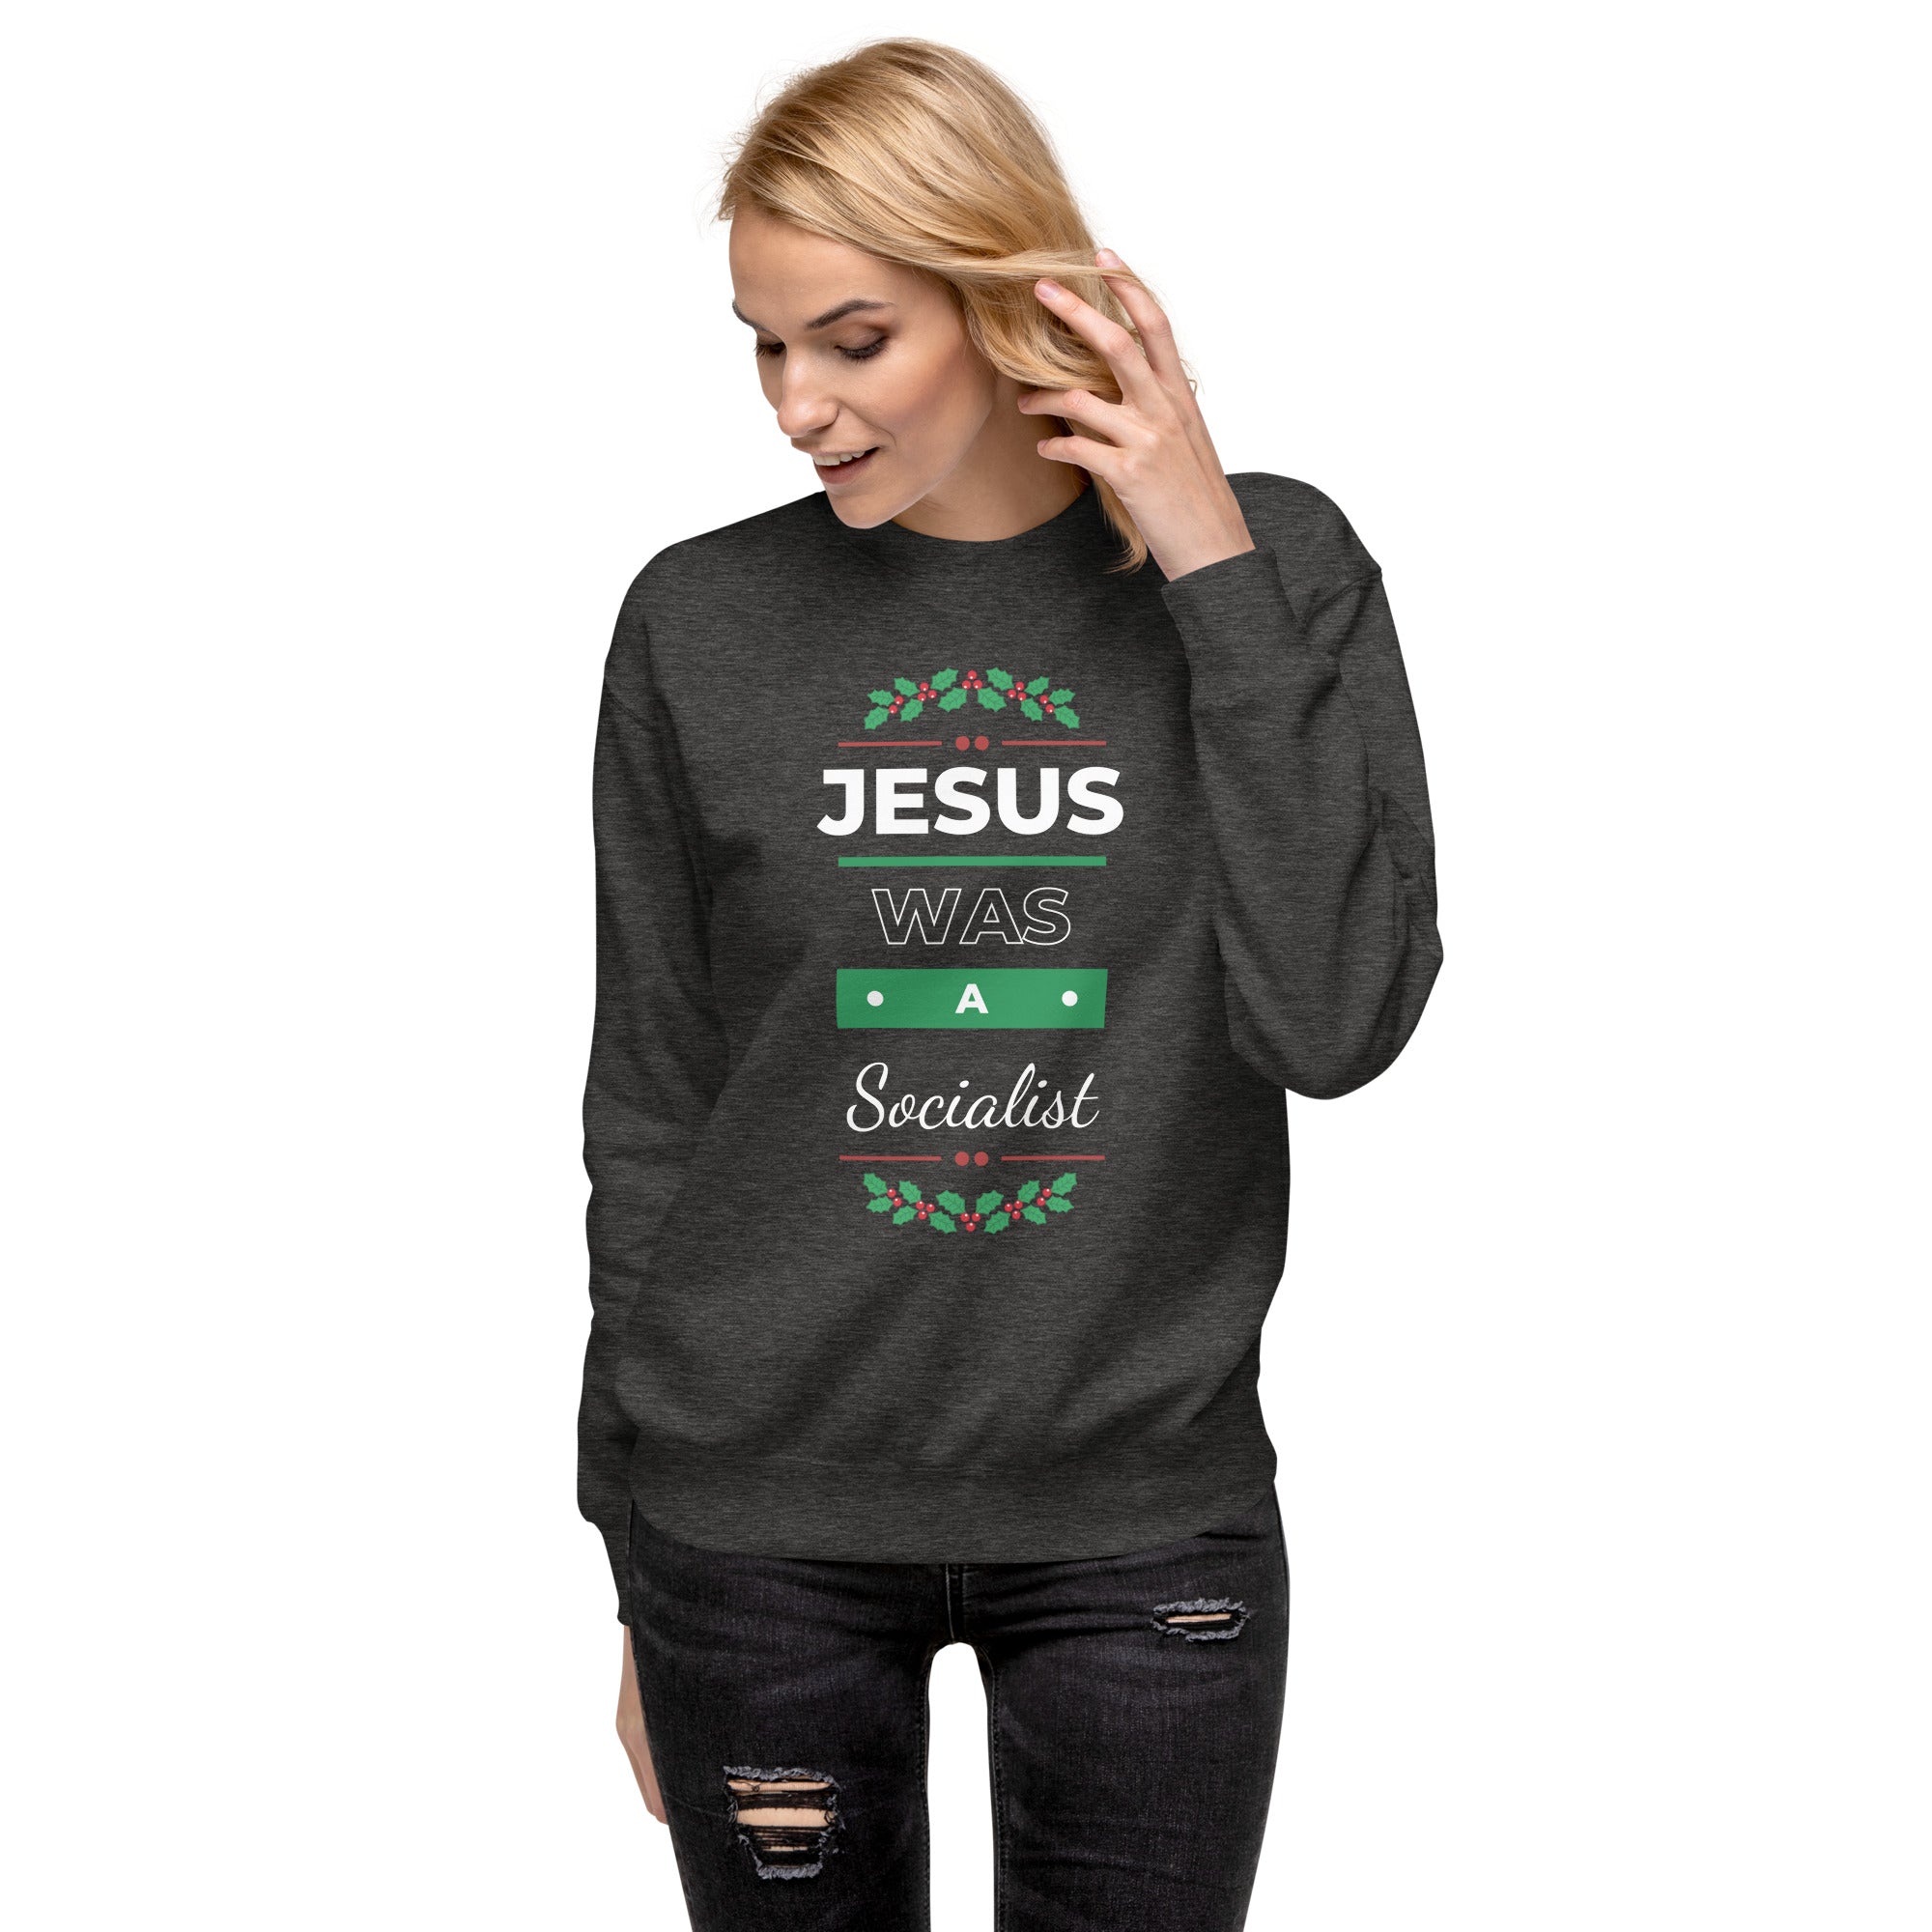 Jesus Was A Socialist - Unisex Premium Sweatshirt